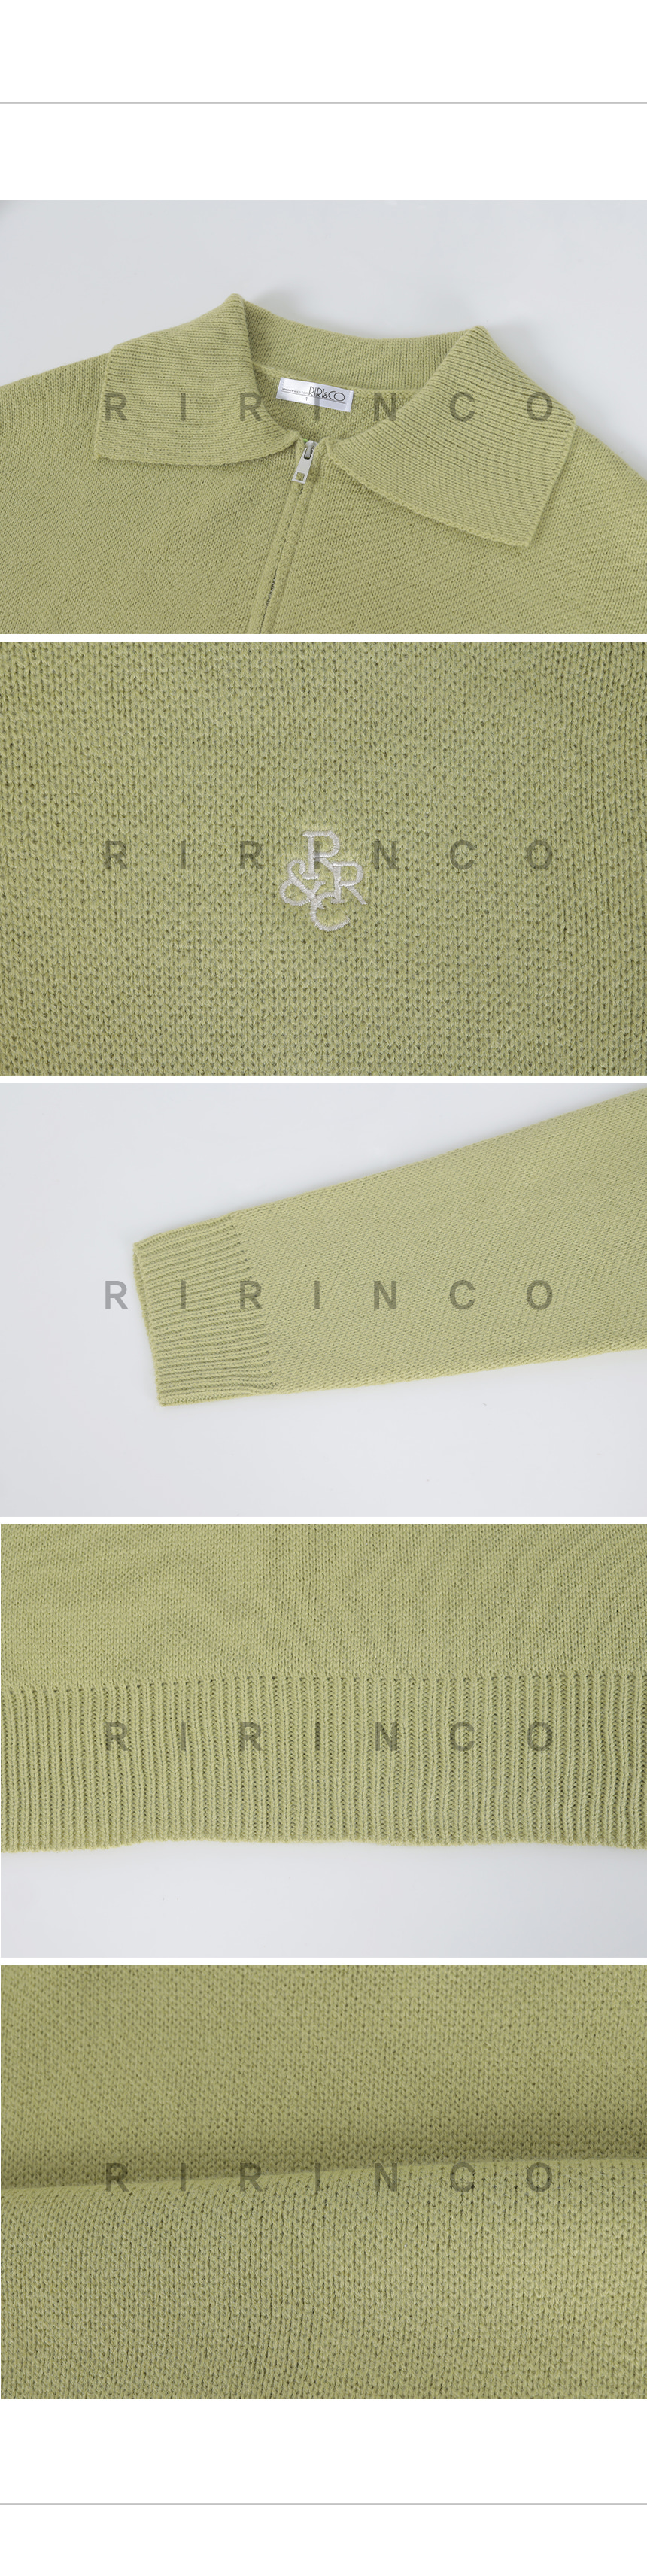 RIRINCO ロゴ刺繍ハーフジップカラーネックニット